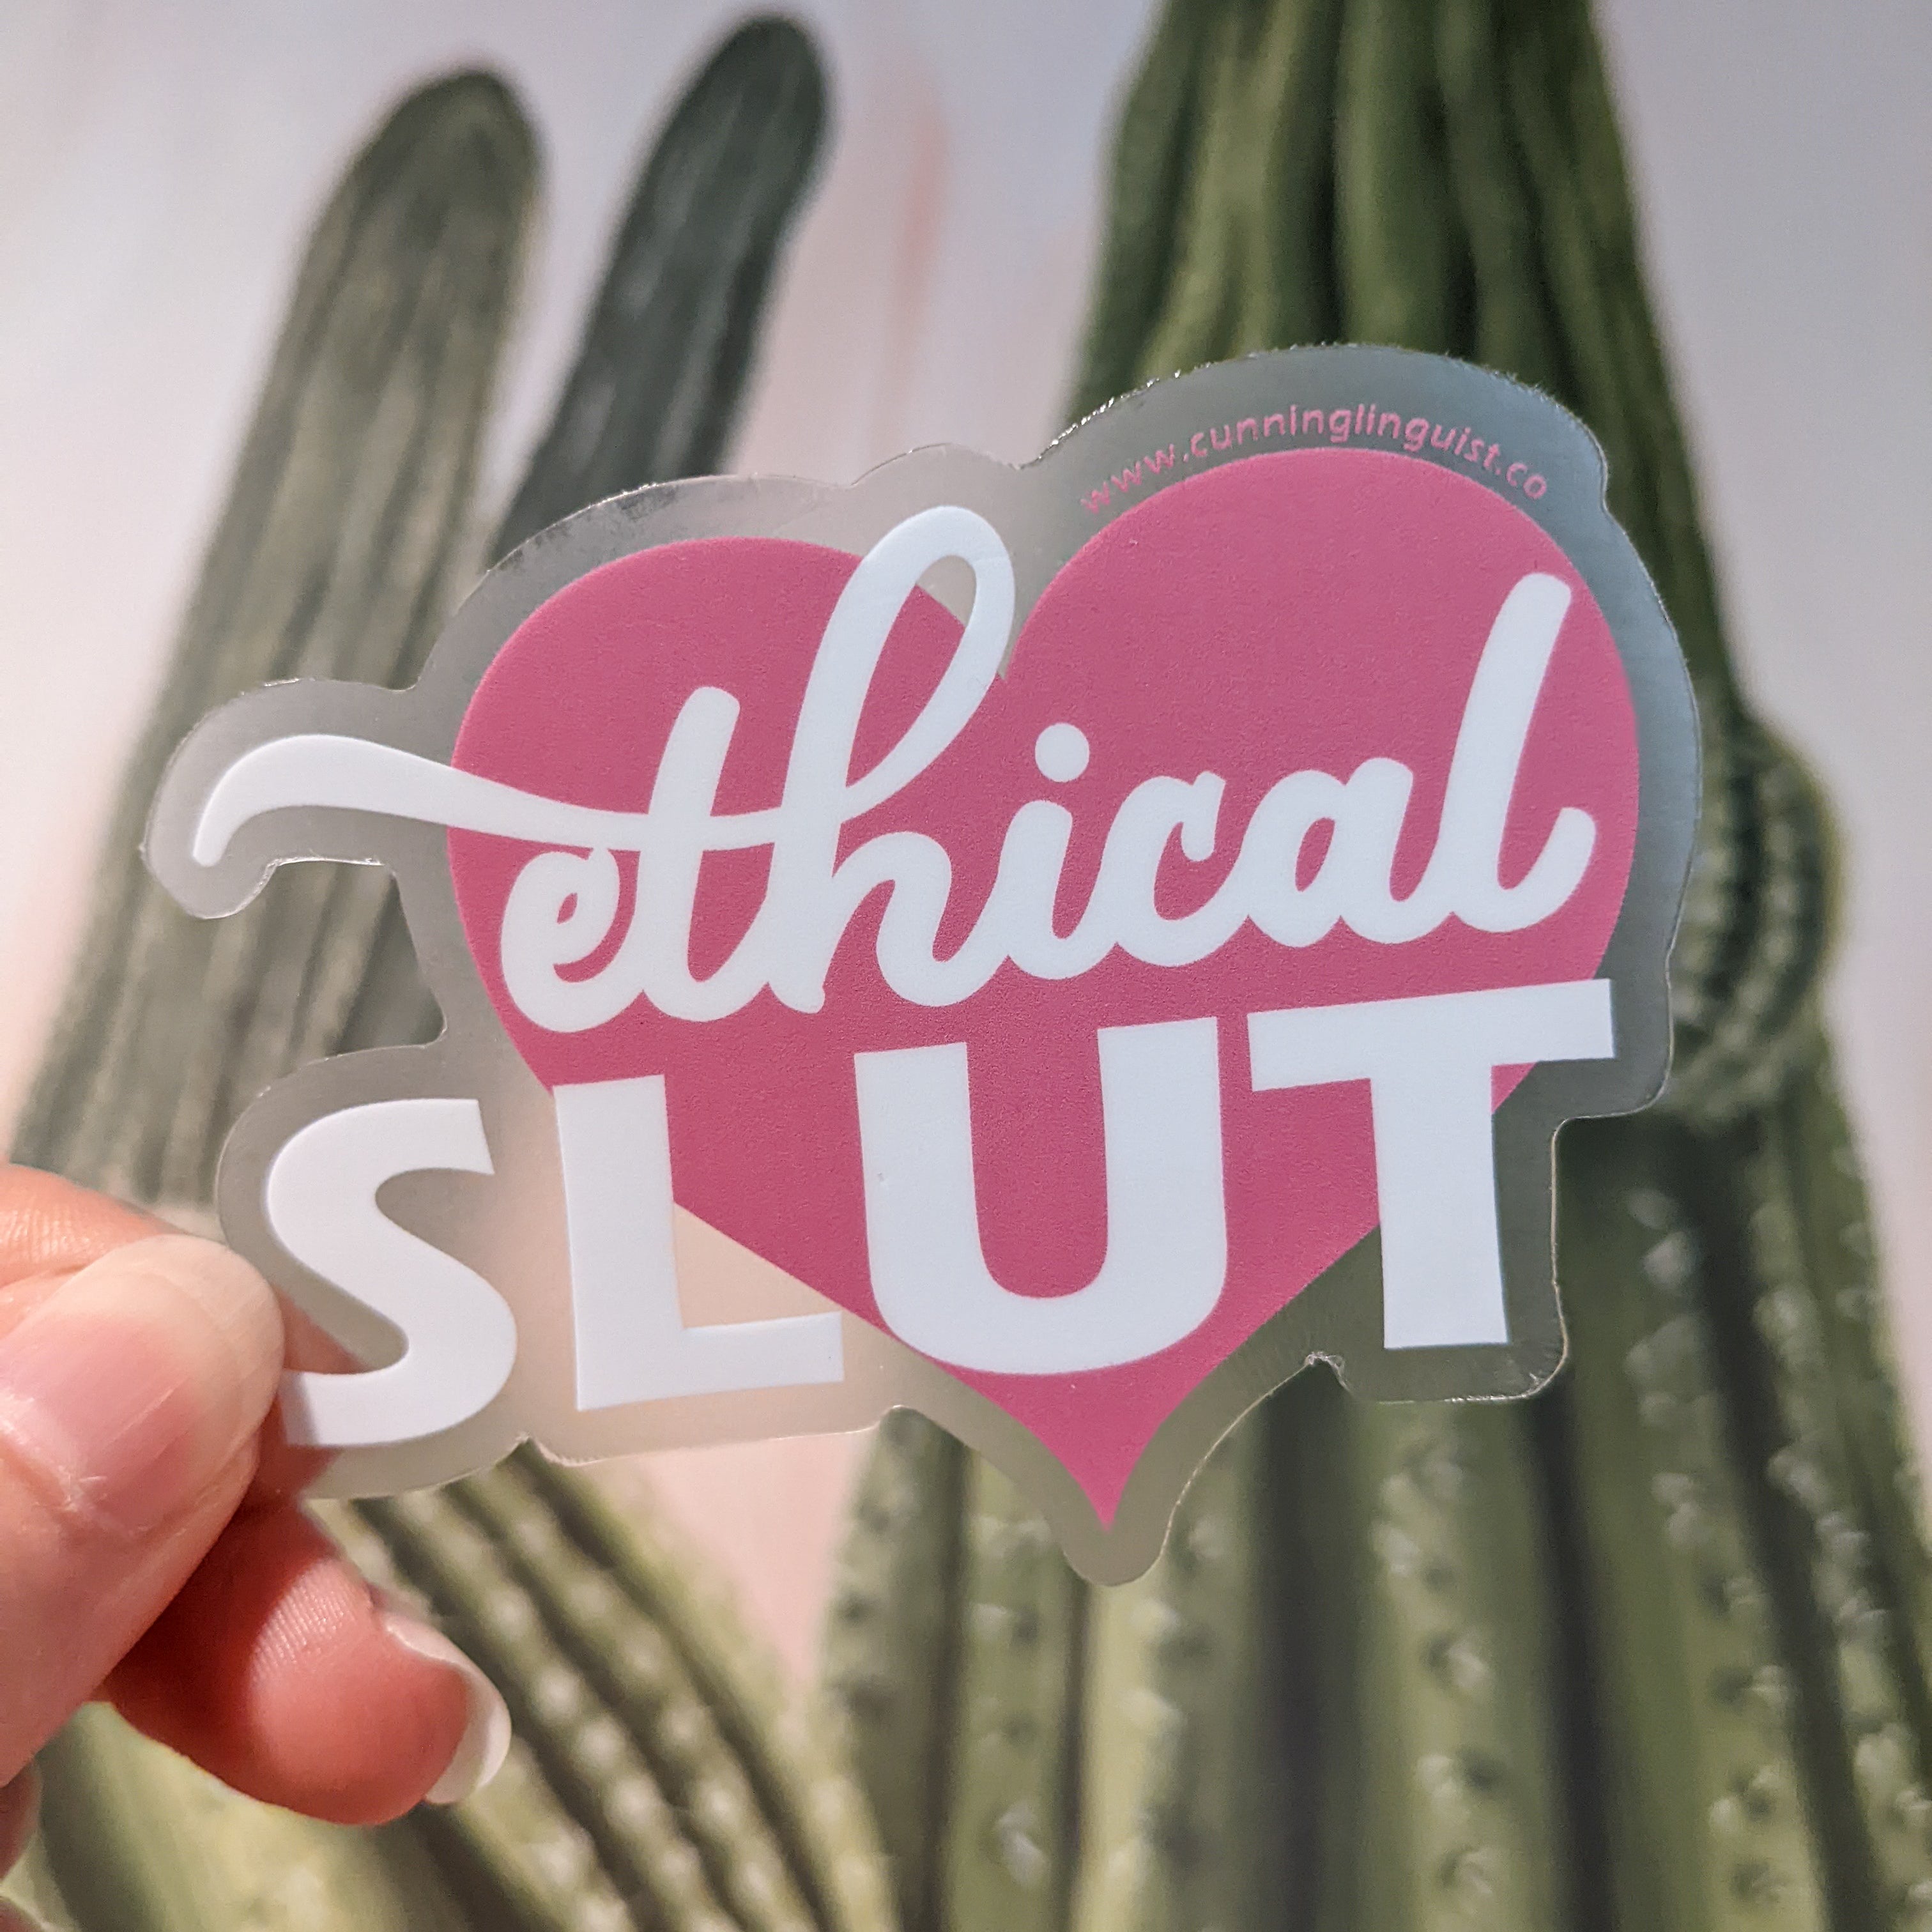 Ethical Slut sticker